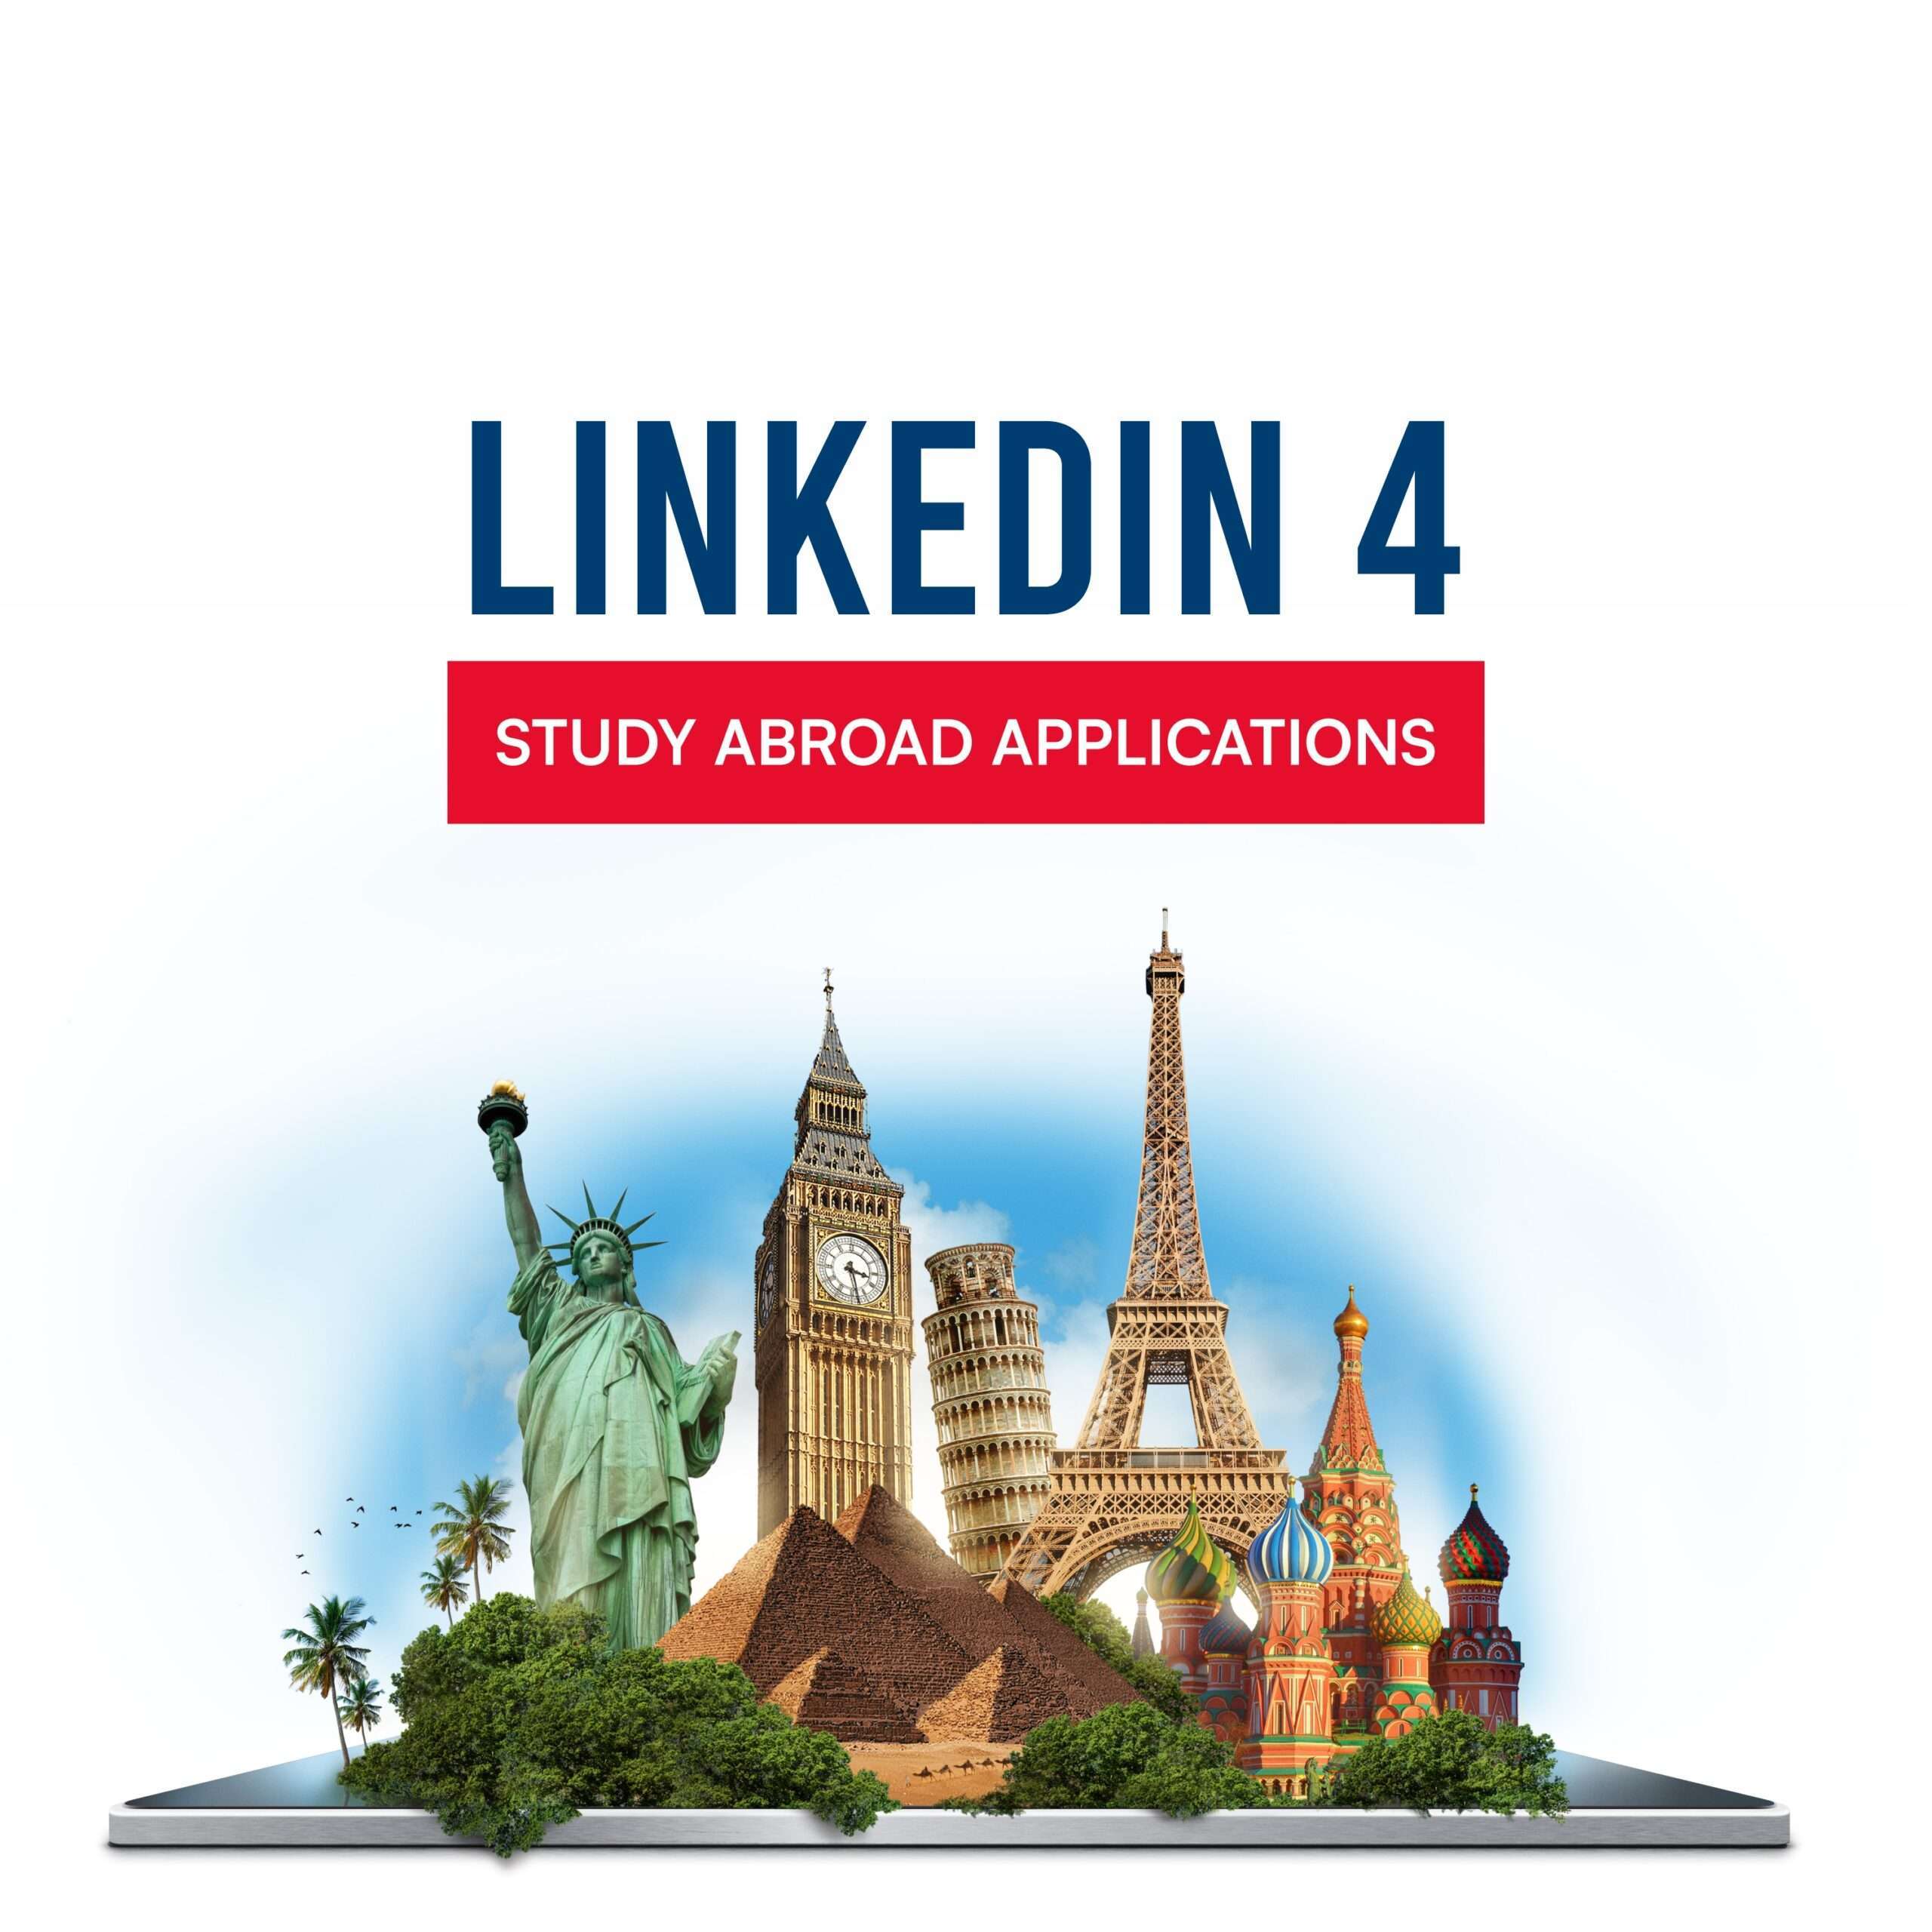 study abroad application, LinkedIn, success, college student, university, USA, college admissions, test prep center, ibadan, social media, X, twitter, nigeria